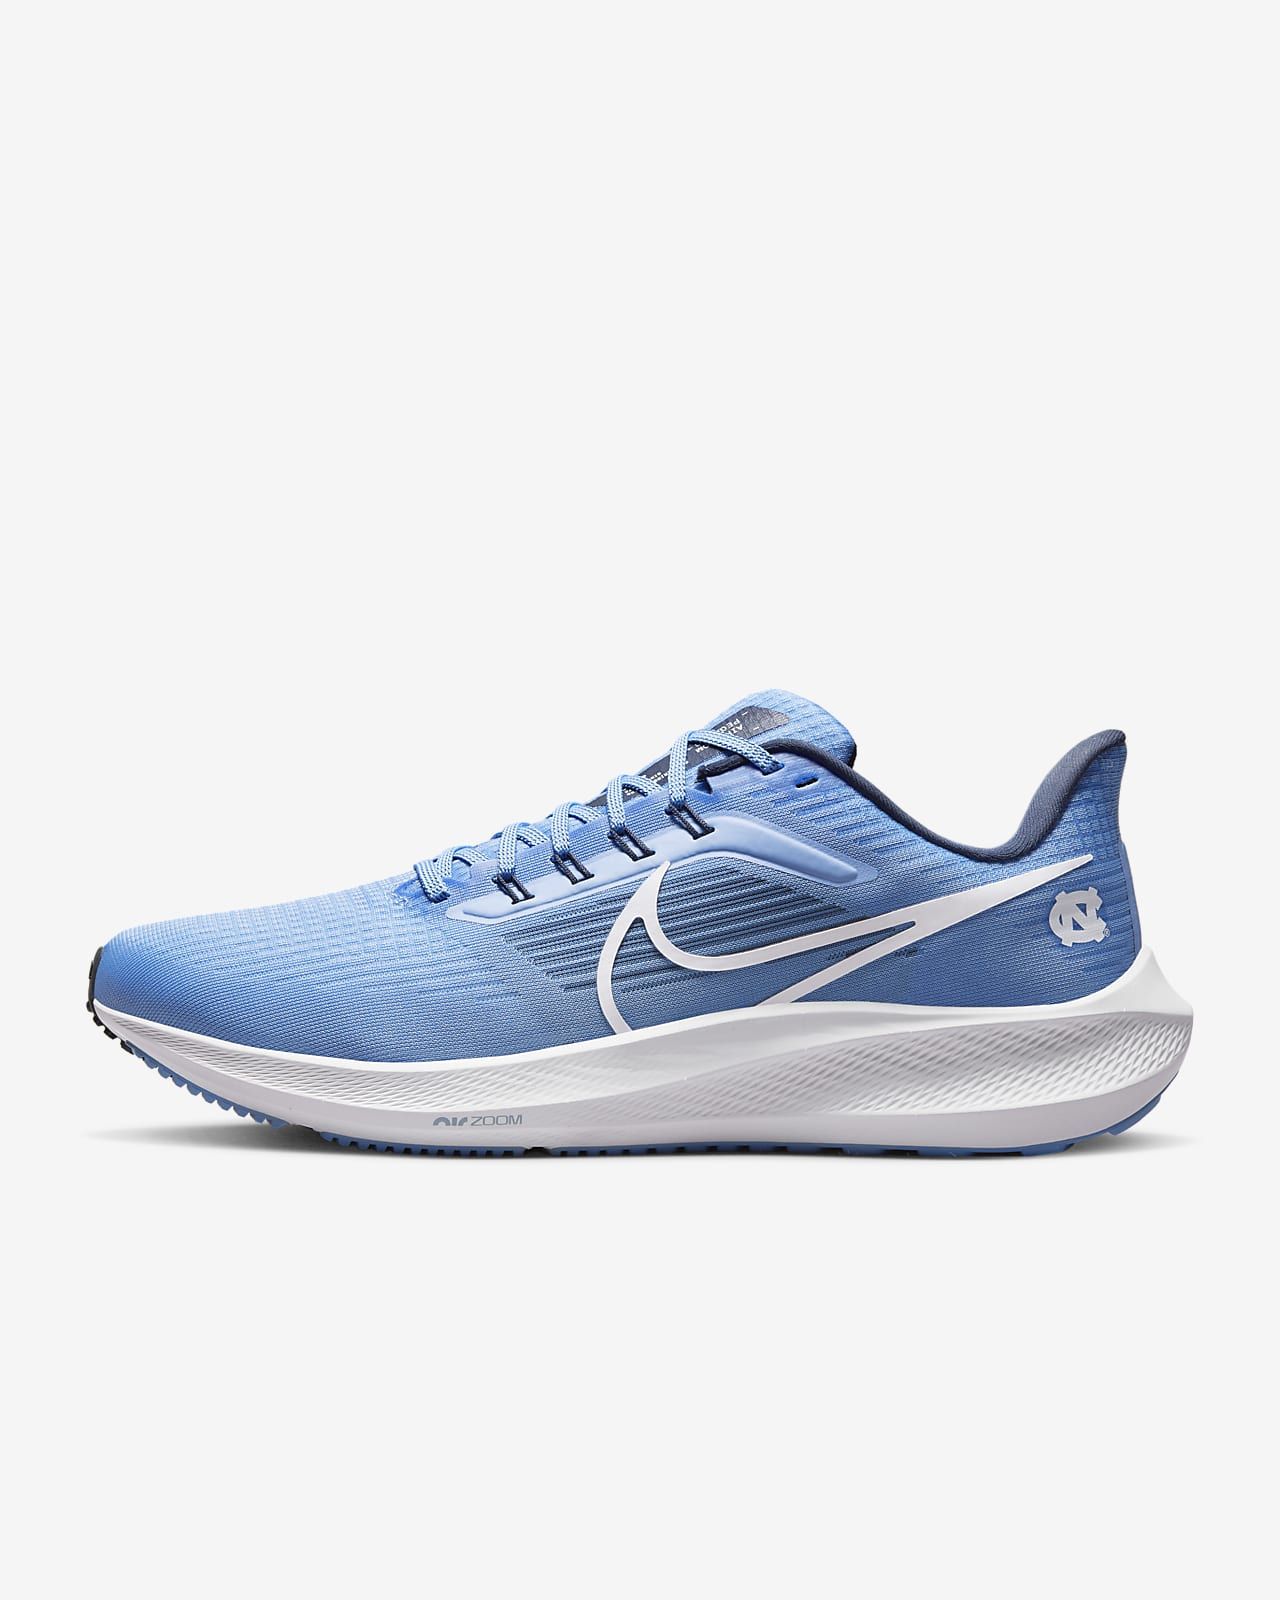 Men's Road Running Shoes | Nike (US)